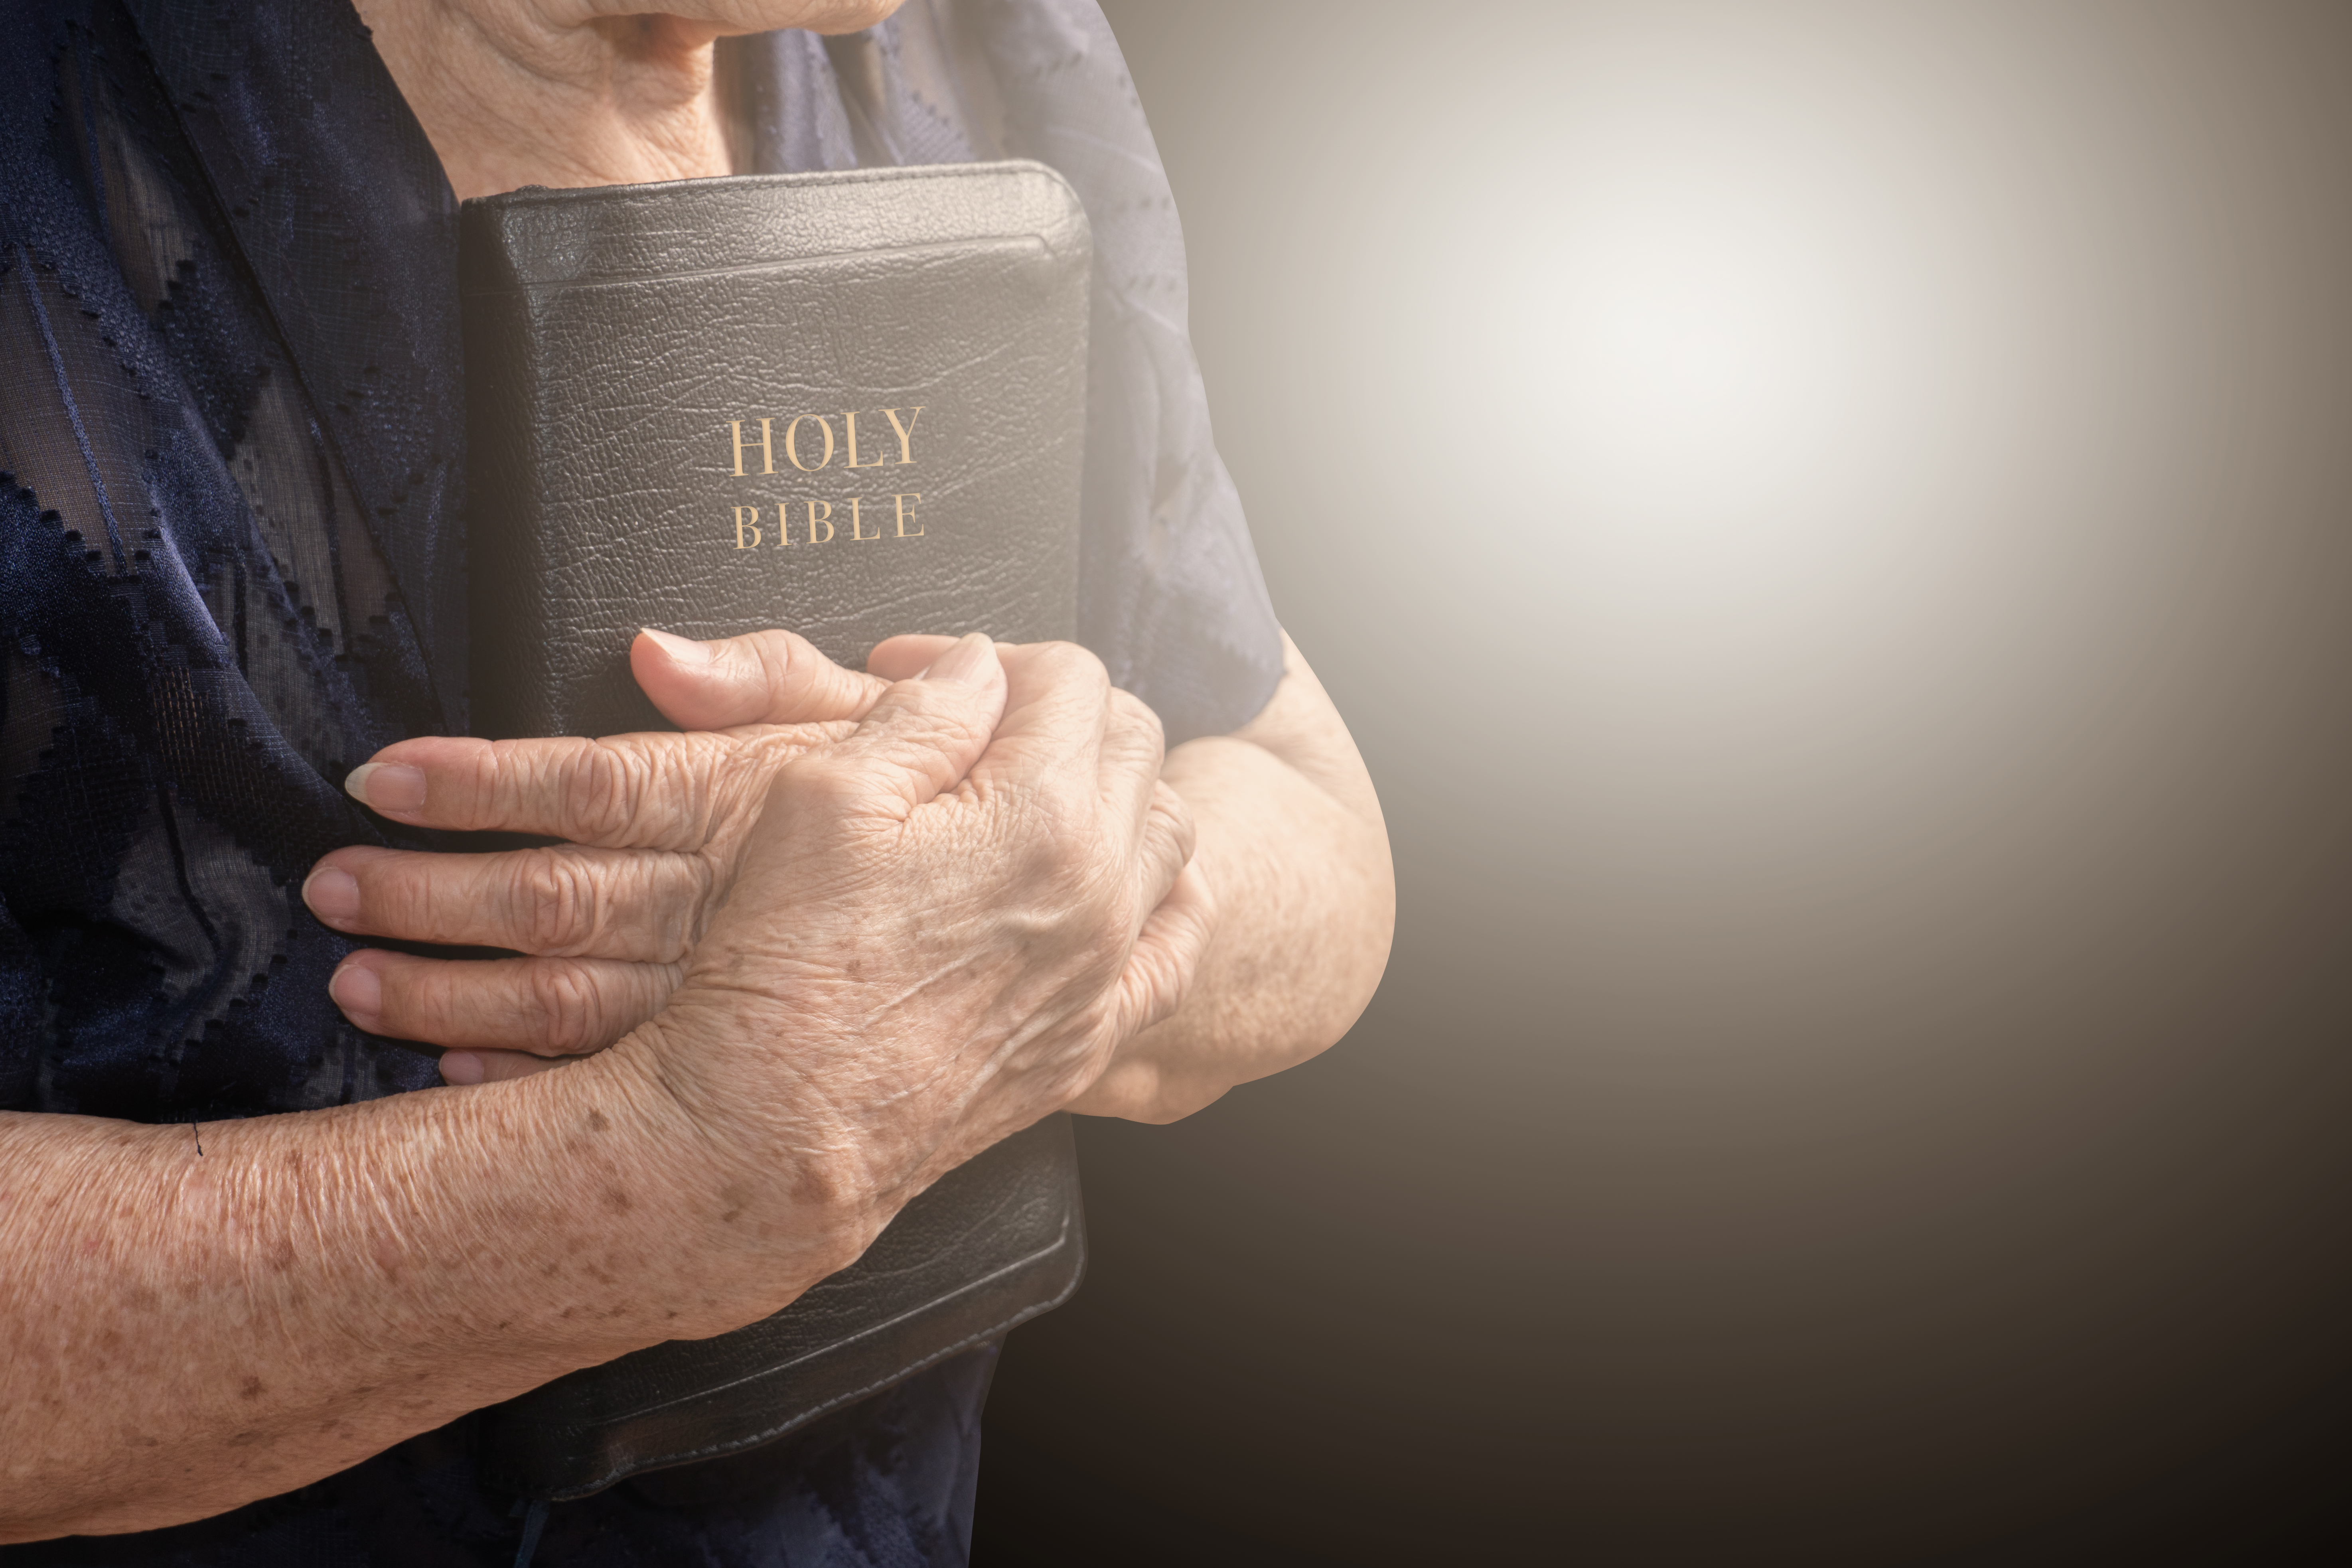 Mujer mayor sosteniendo una biblia | Fuente: Shutterstock